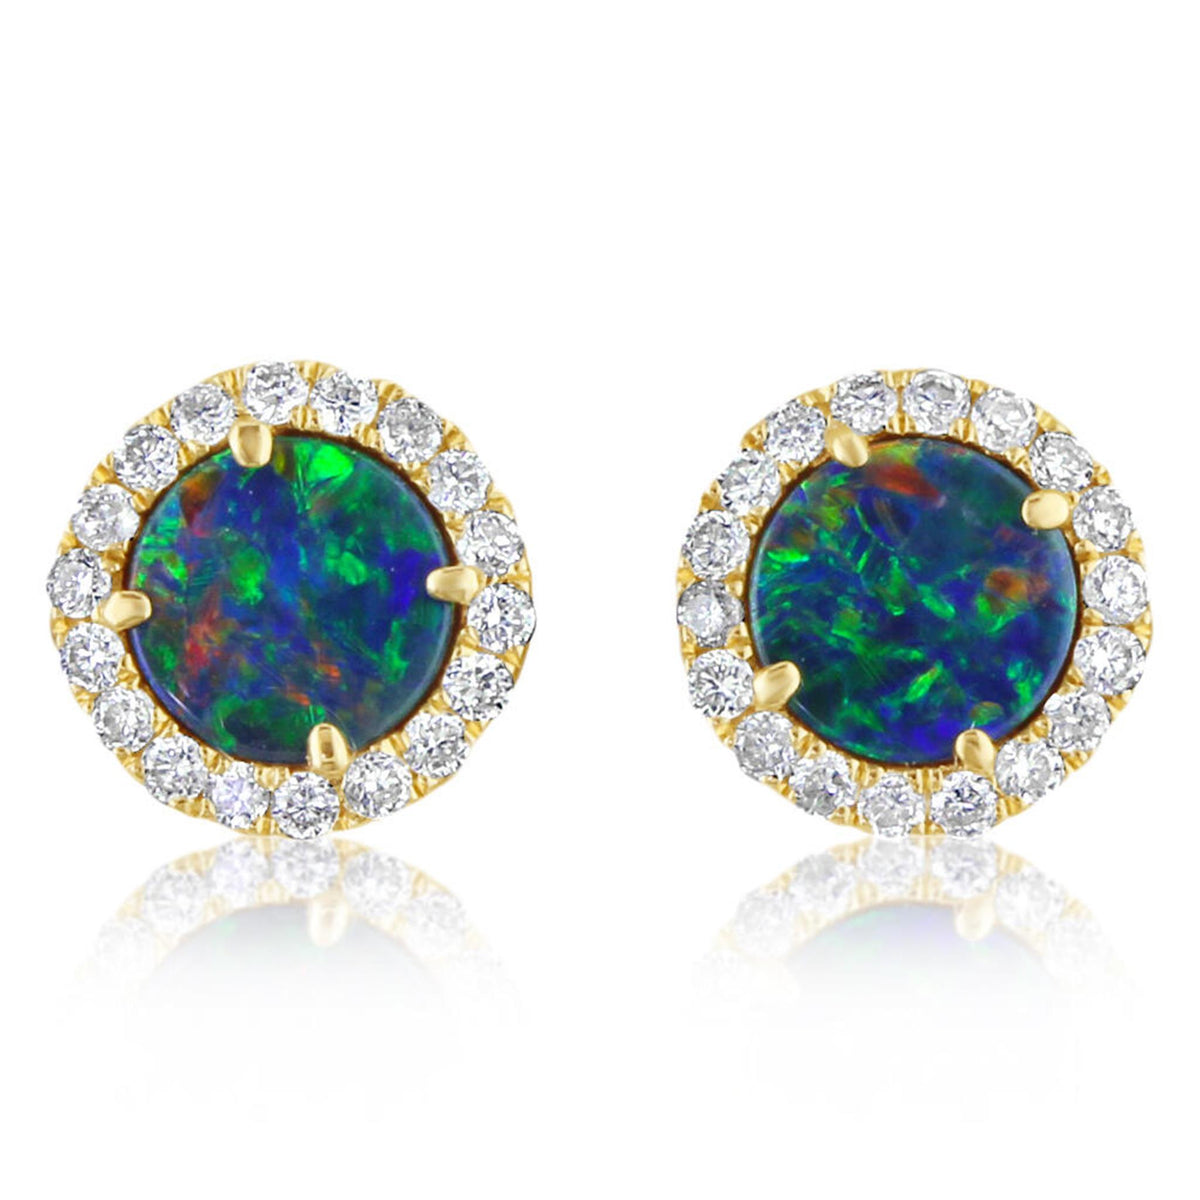 14Kt Yellow Gold Halo Earrings With 0.82ct Australian Opal Doublets